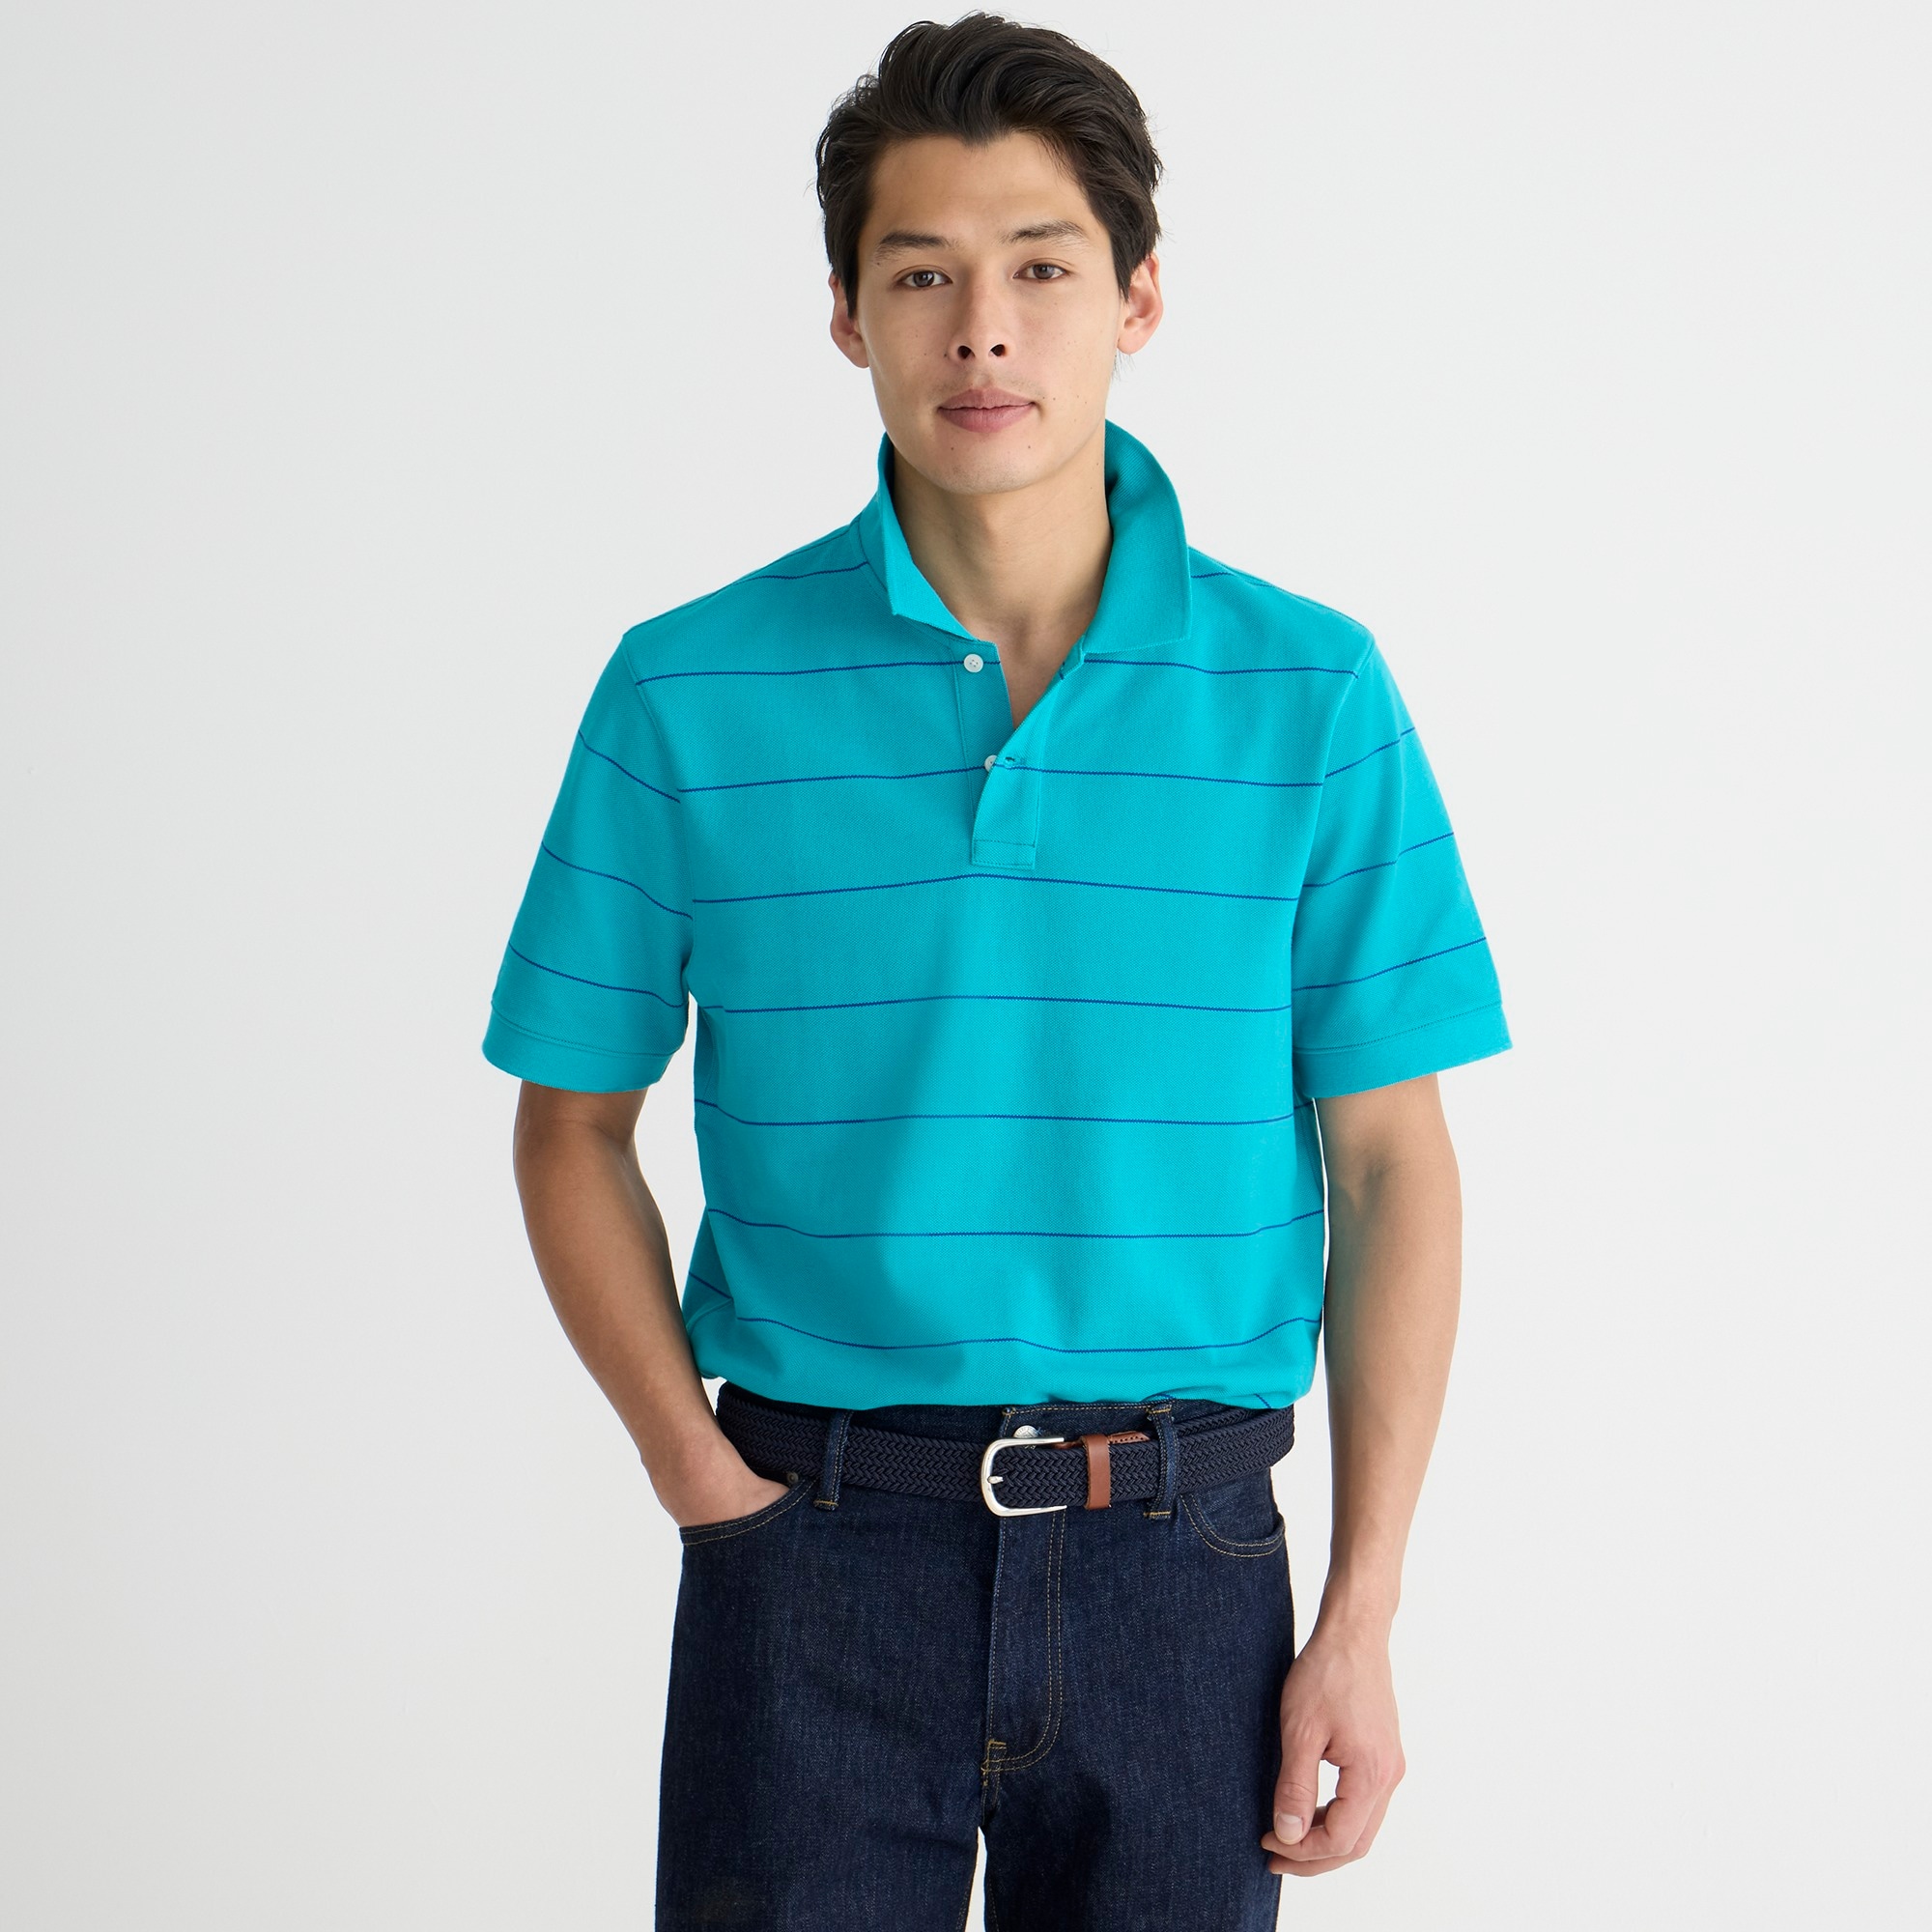  Piqu&eacute; polo shirt in stripe